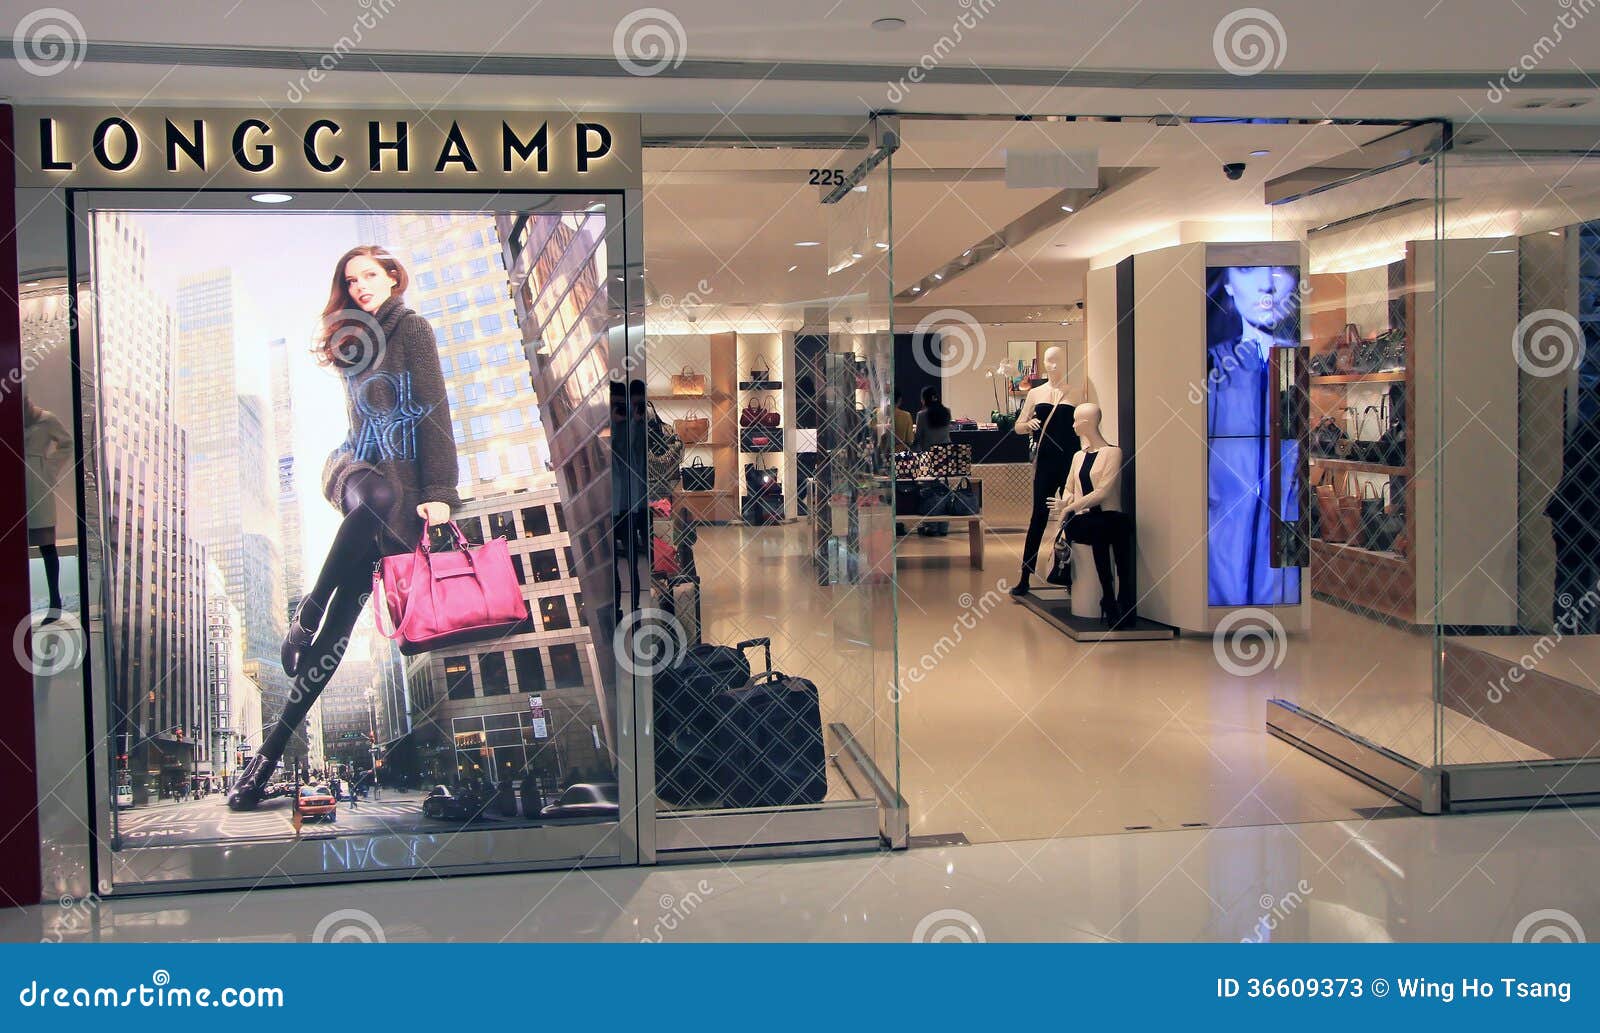 French luxury fashion brand Longchamp store seen in Hong Kong